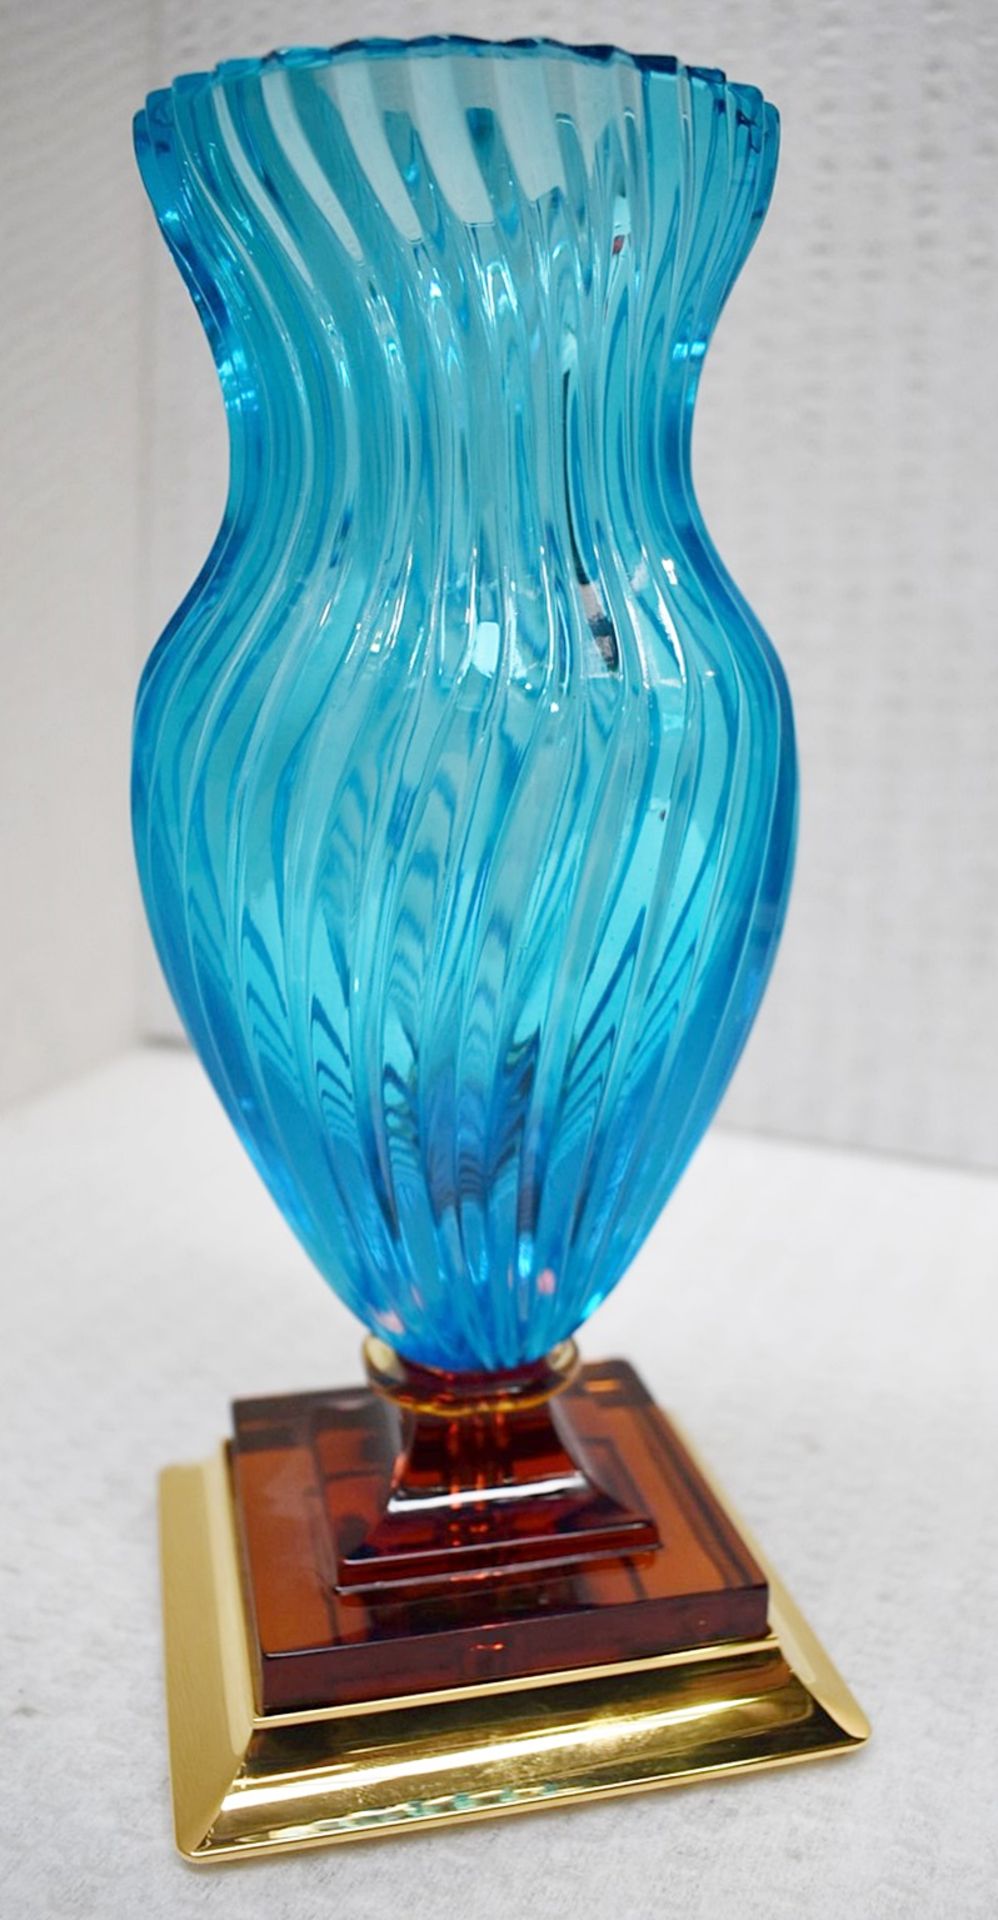 1 x BALDI 'Home Jewels' Italian Hand-crafted Artisan 'TIEPOLO' Vase **Original RRP £1,520** - Image 2 of 4